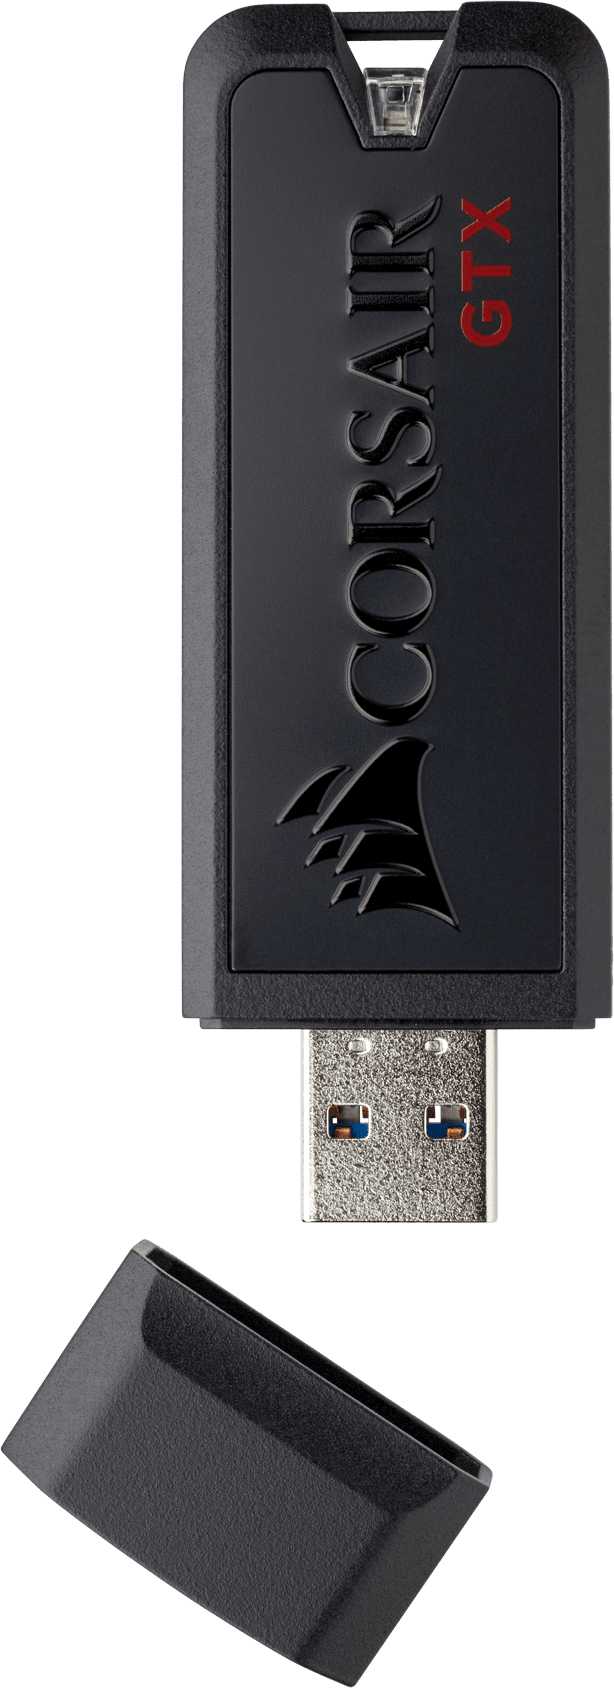 Flash Voyager® GTX USB Premium Flash Drive